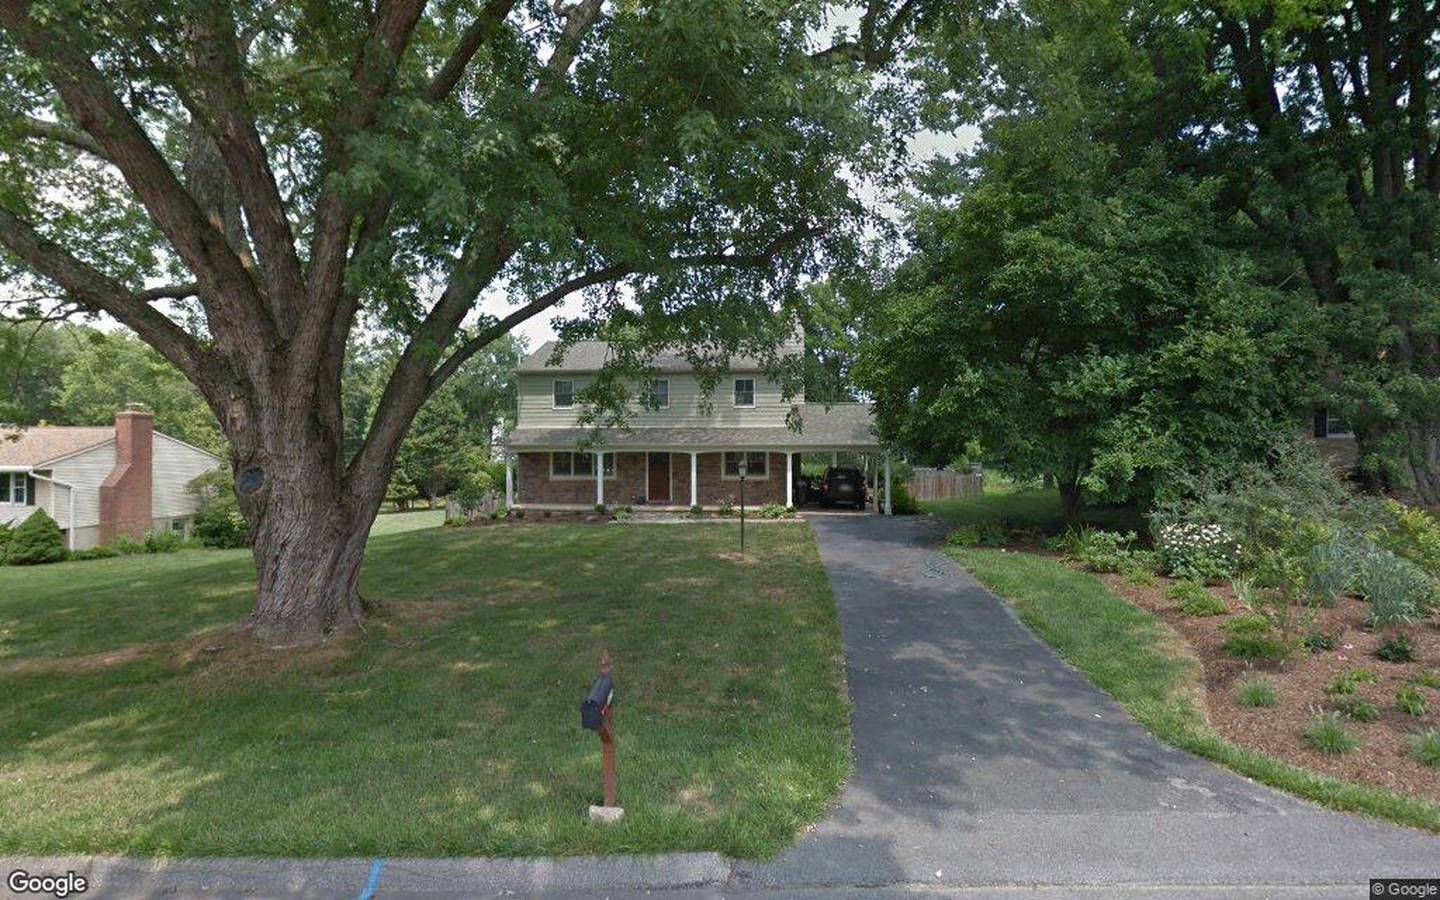 $705,000, single-family home at 10226 Burnside Drive 